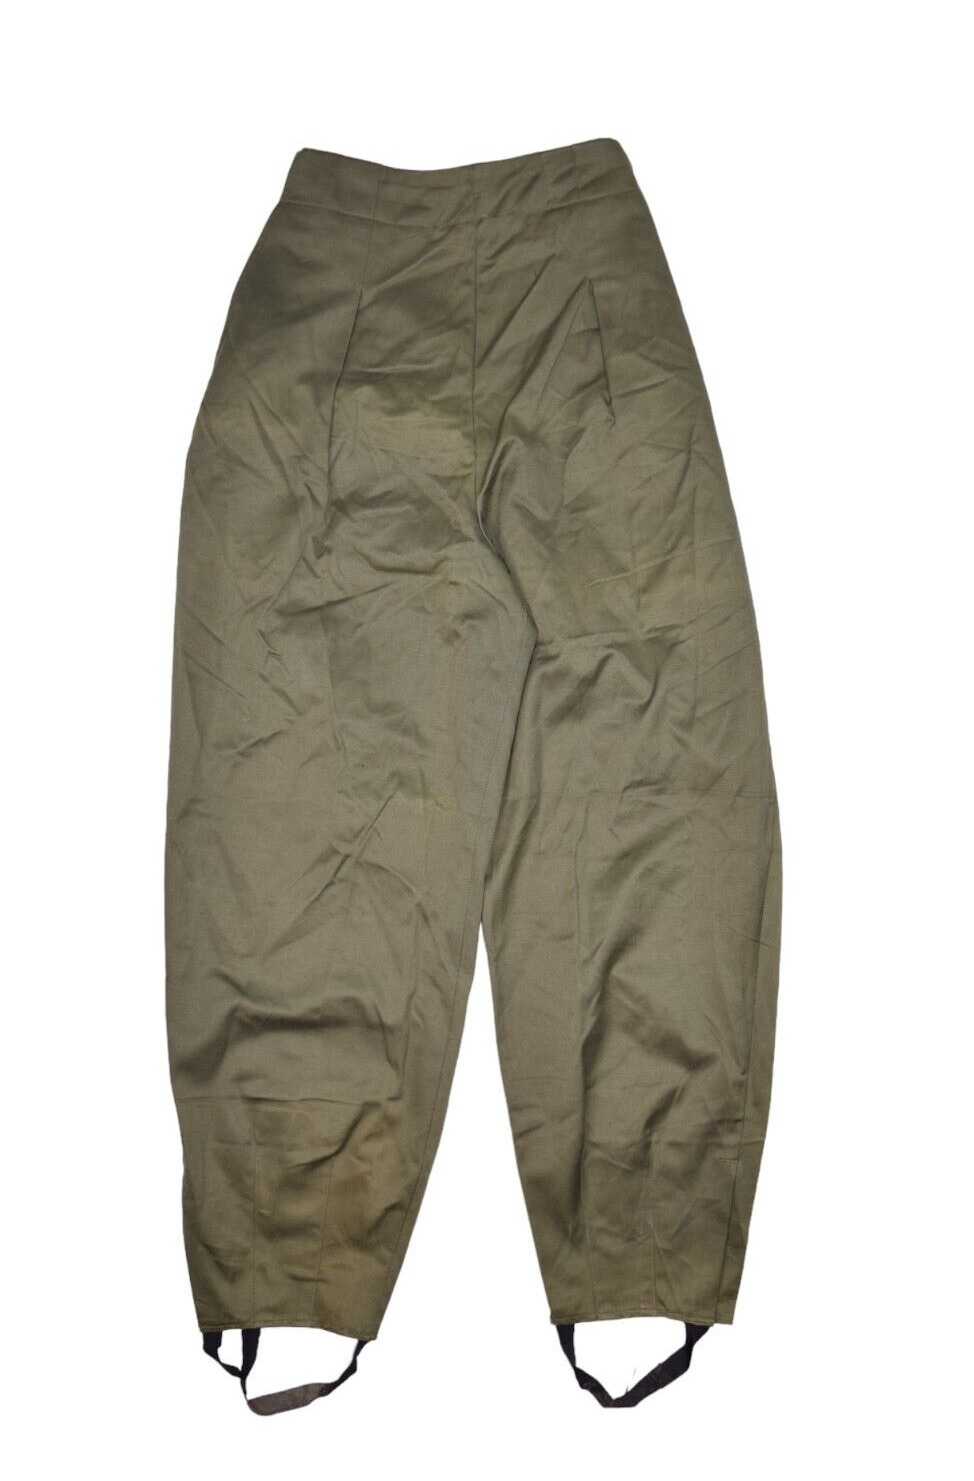 Vintage WWII Pants Womens Outer Cover Trousers Stirrup Nurse Service Uniform